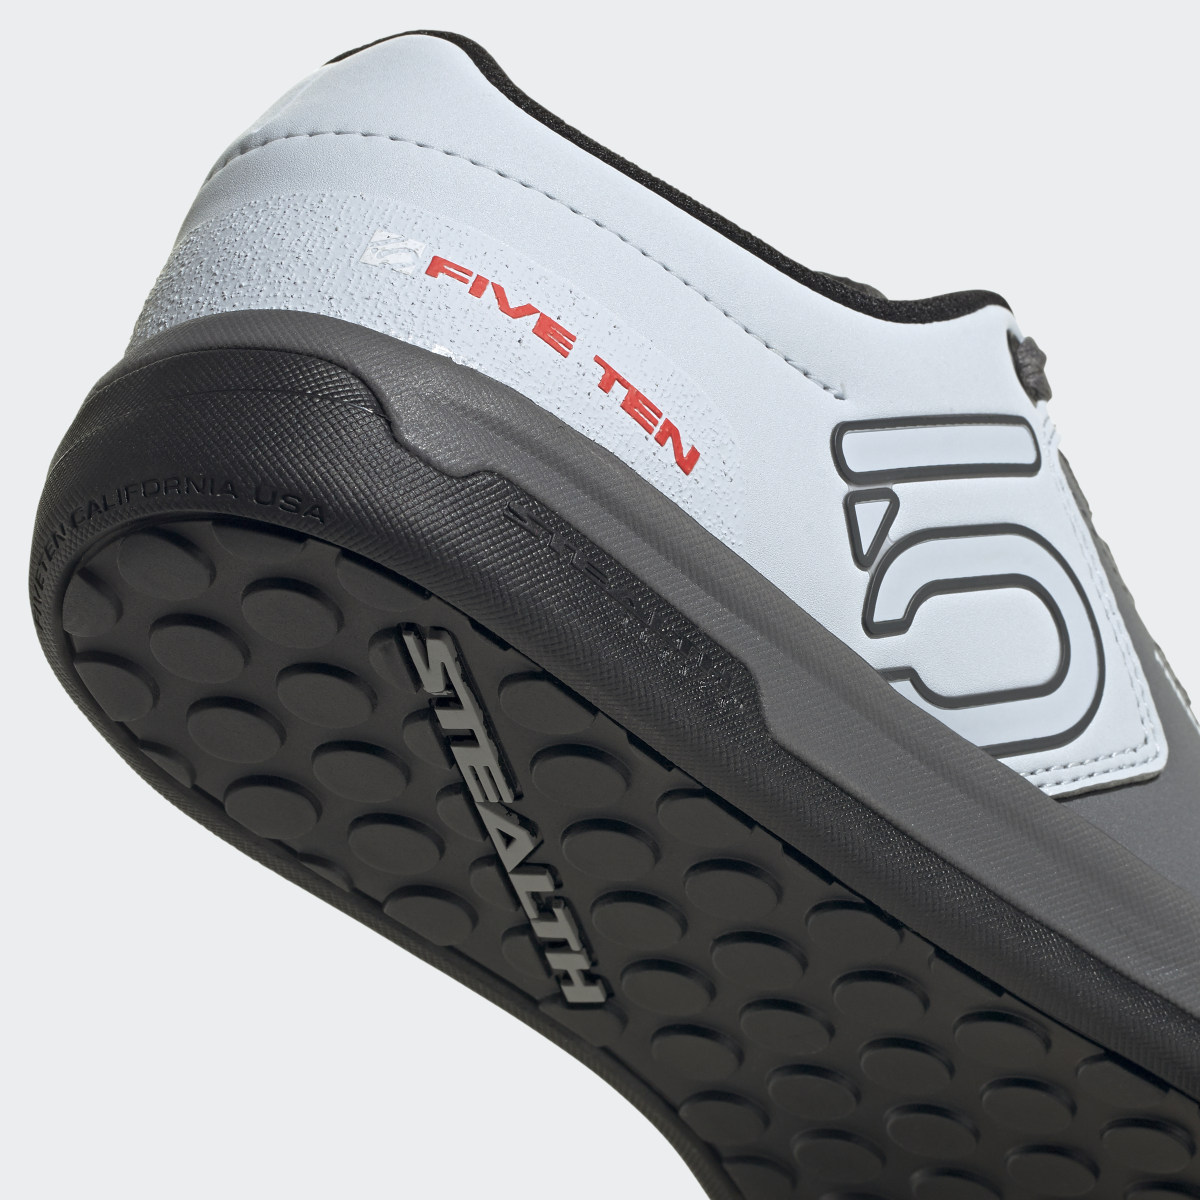 Adidas Five Ten Freerider Pro Mountain Bike Shoes. 9